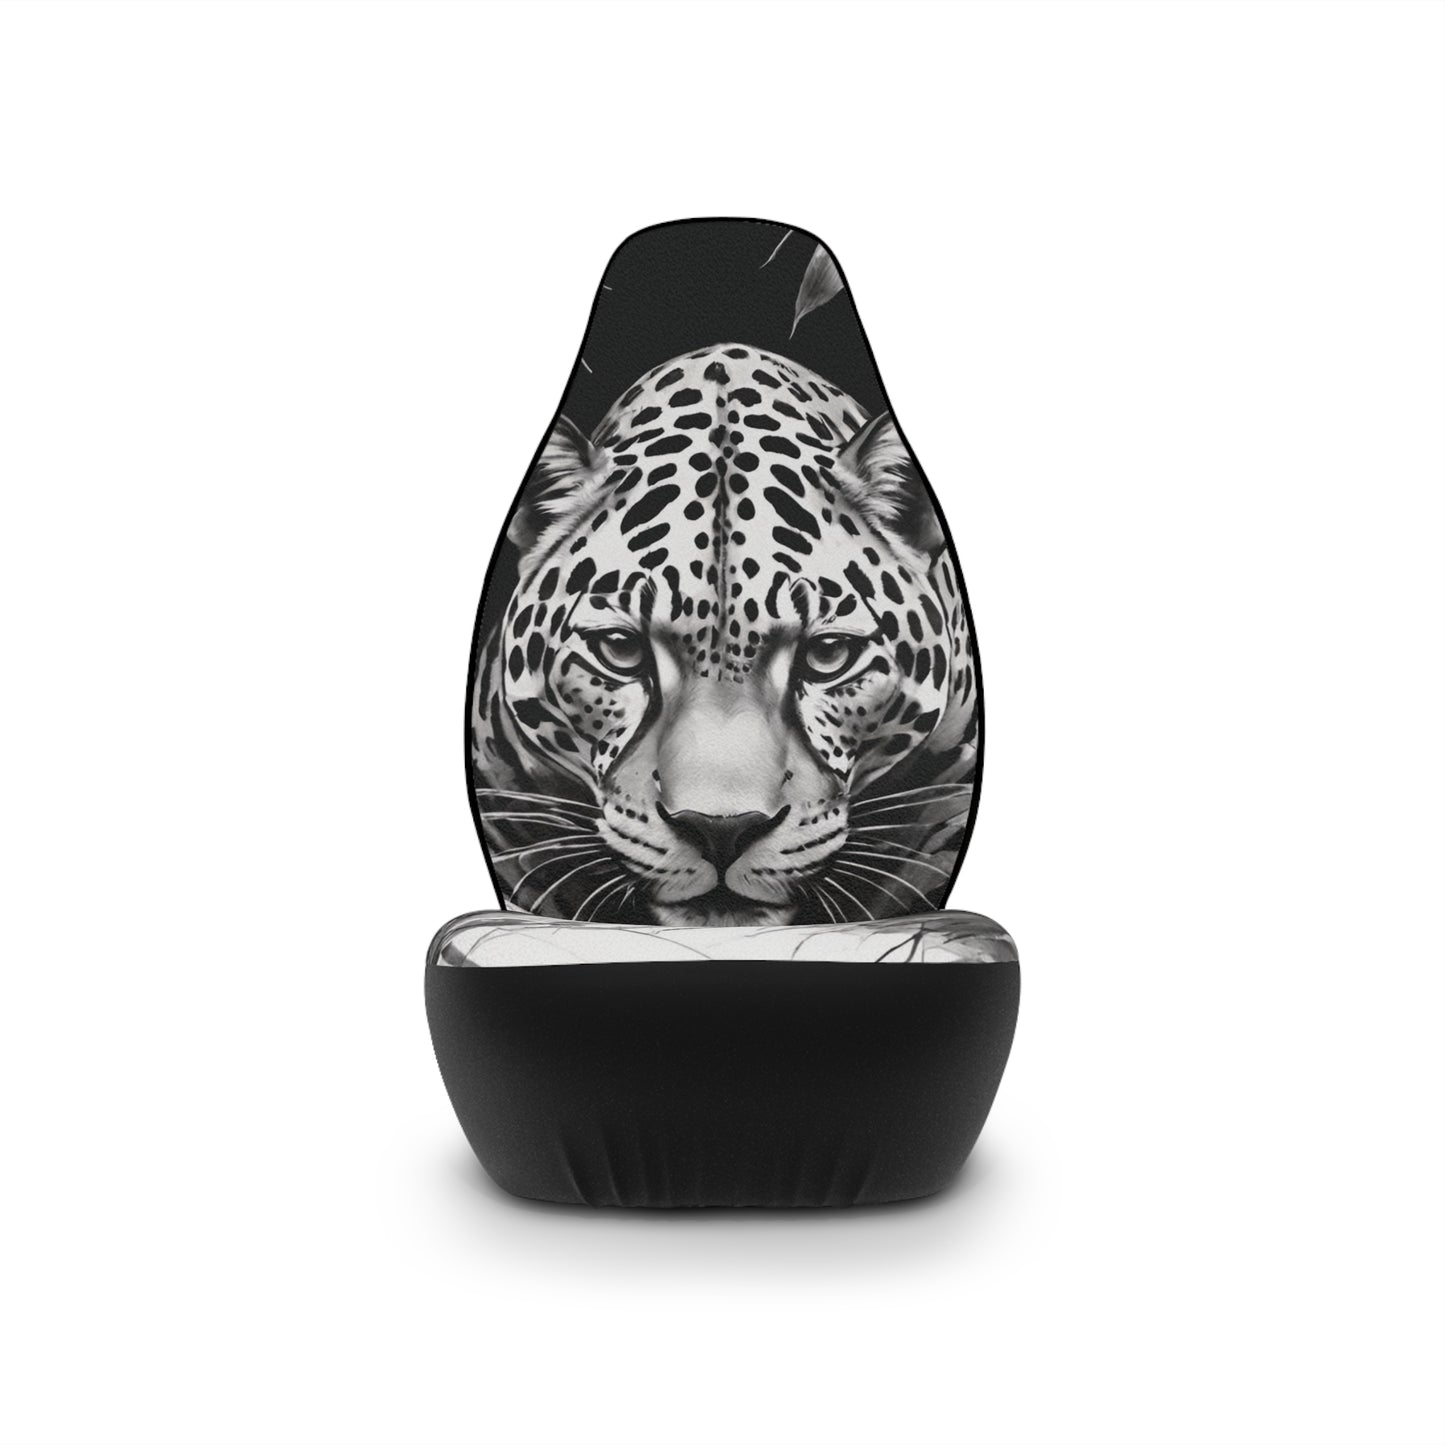 Jaguar Print Car Seat Covers - Animal Design Front Seat Protection